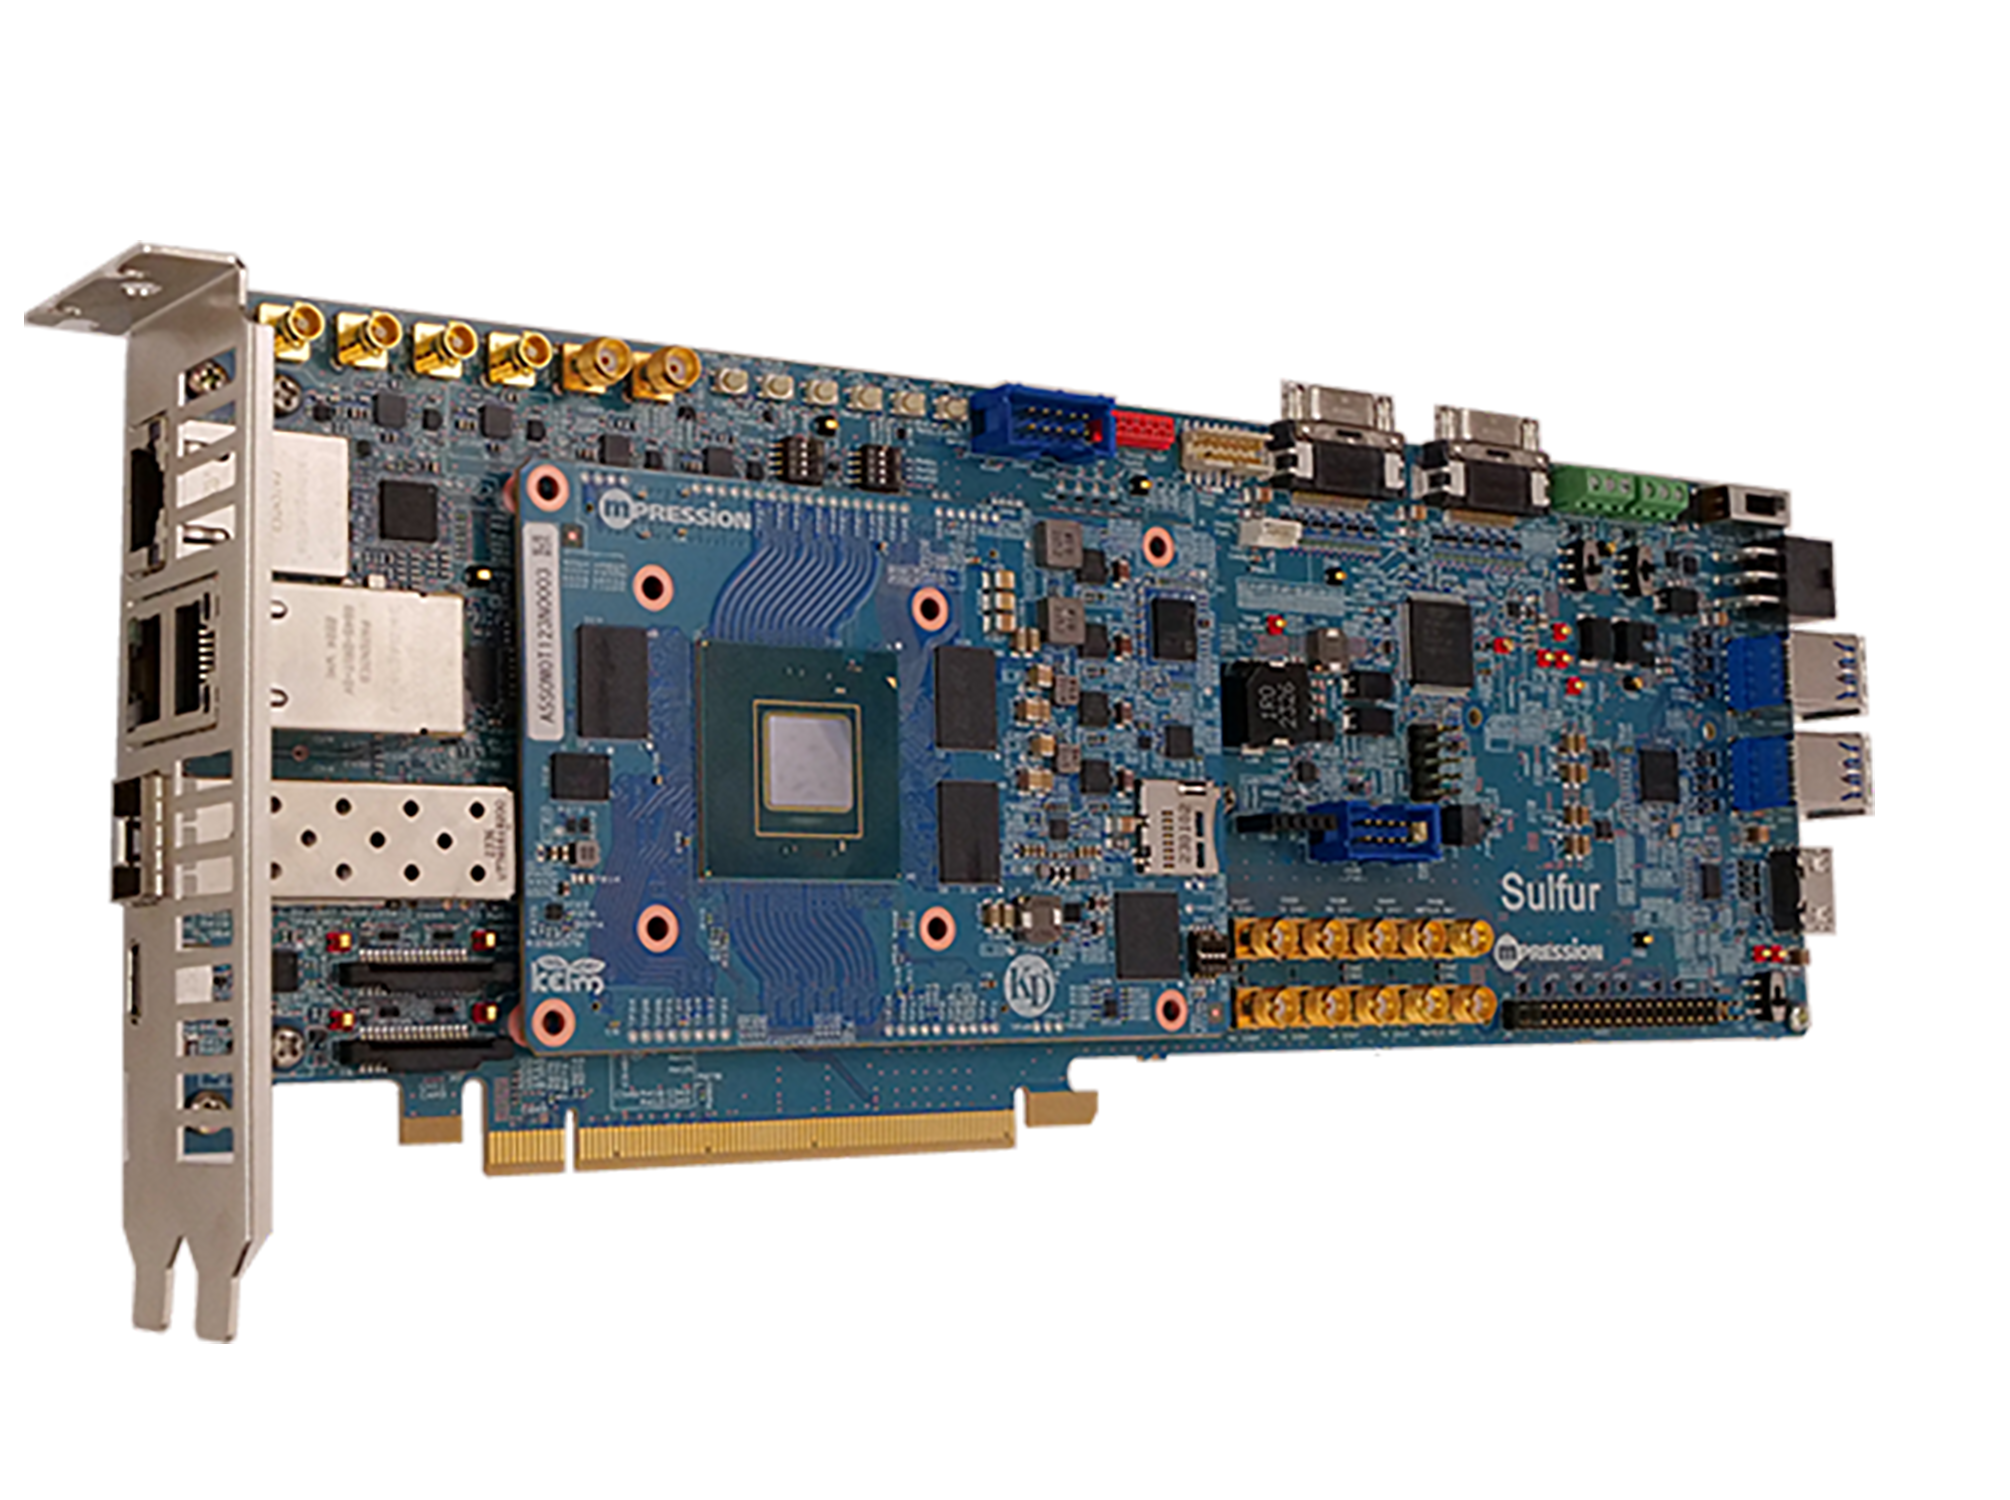 Sulfur - SOM Development Kit with Agilex™ 5 FPGAs E Series